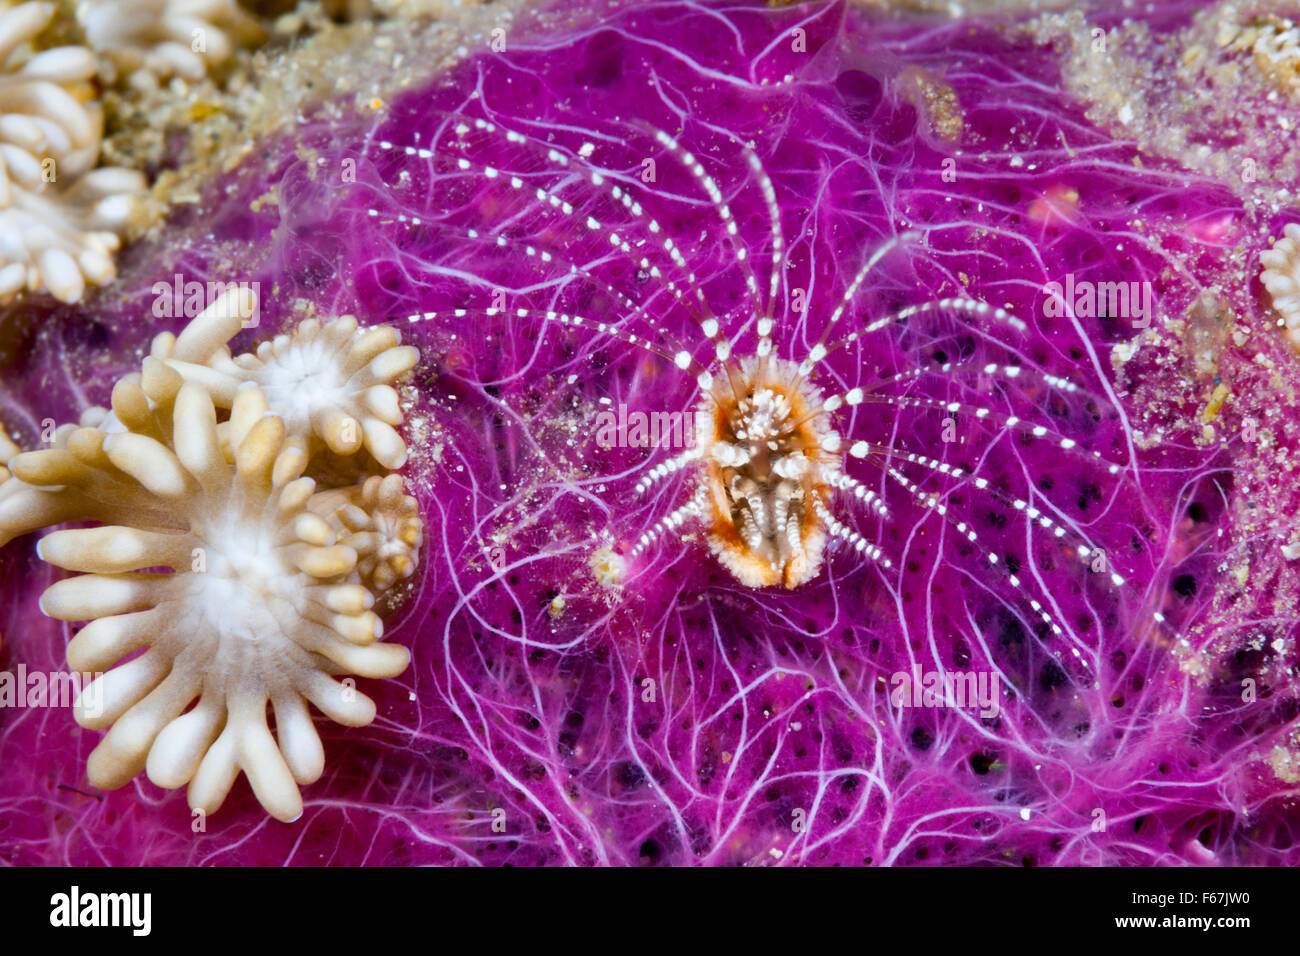 Coral Barnacle filtrate Plankton, Ceratoconcha sp., Komodo National Park, Indonesia Stock Photo